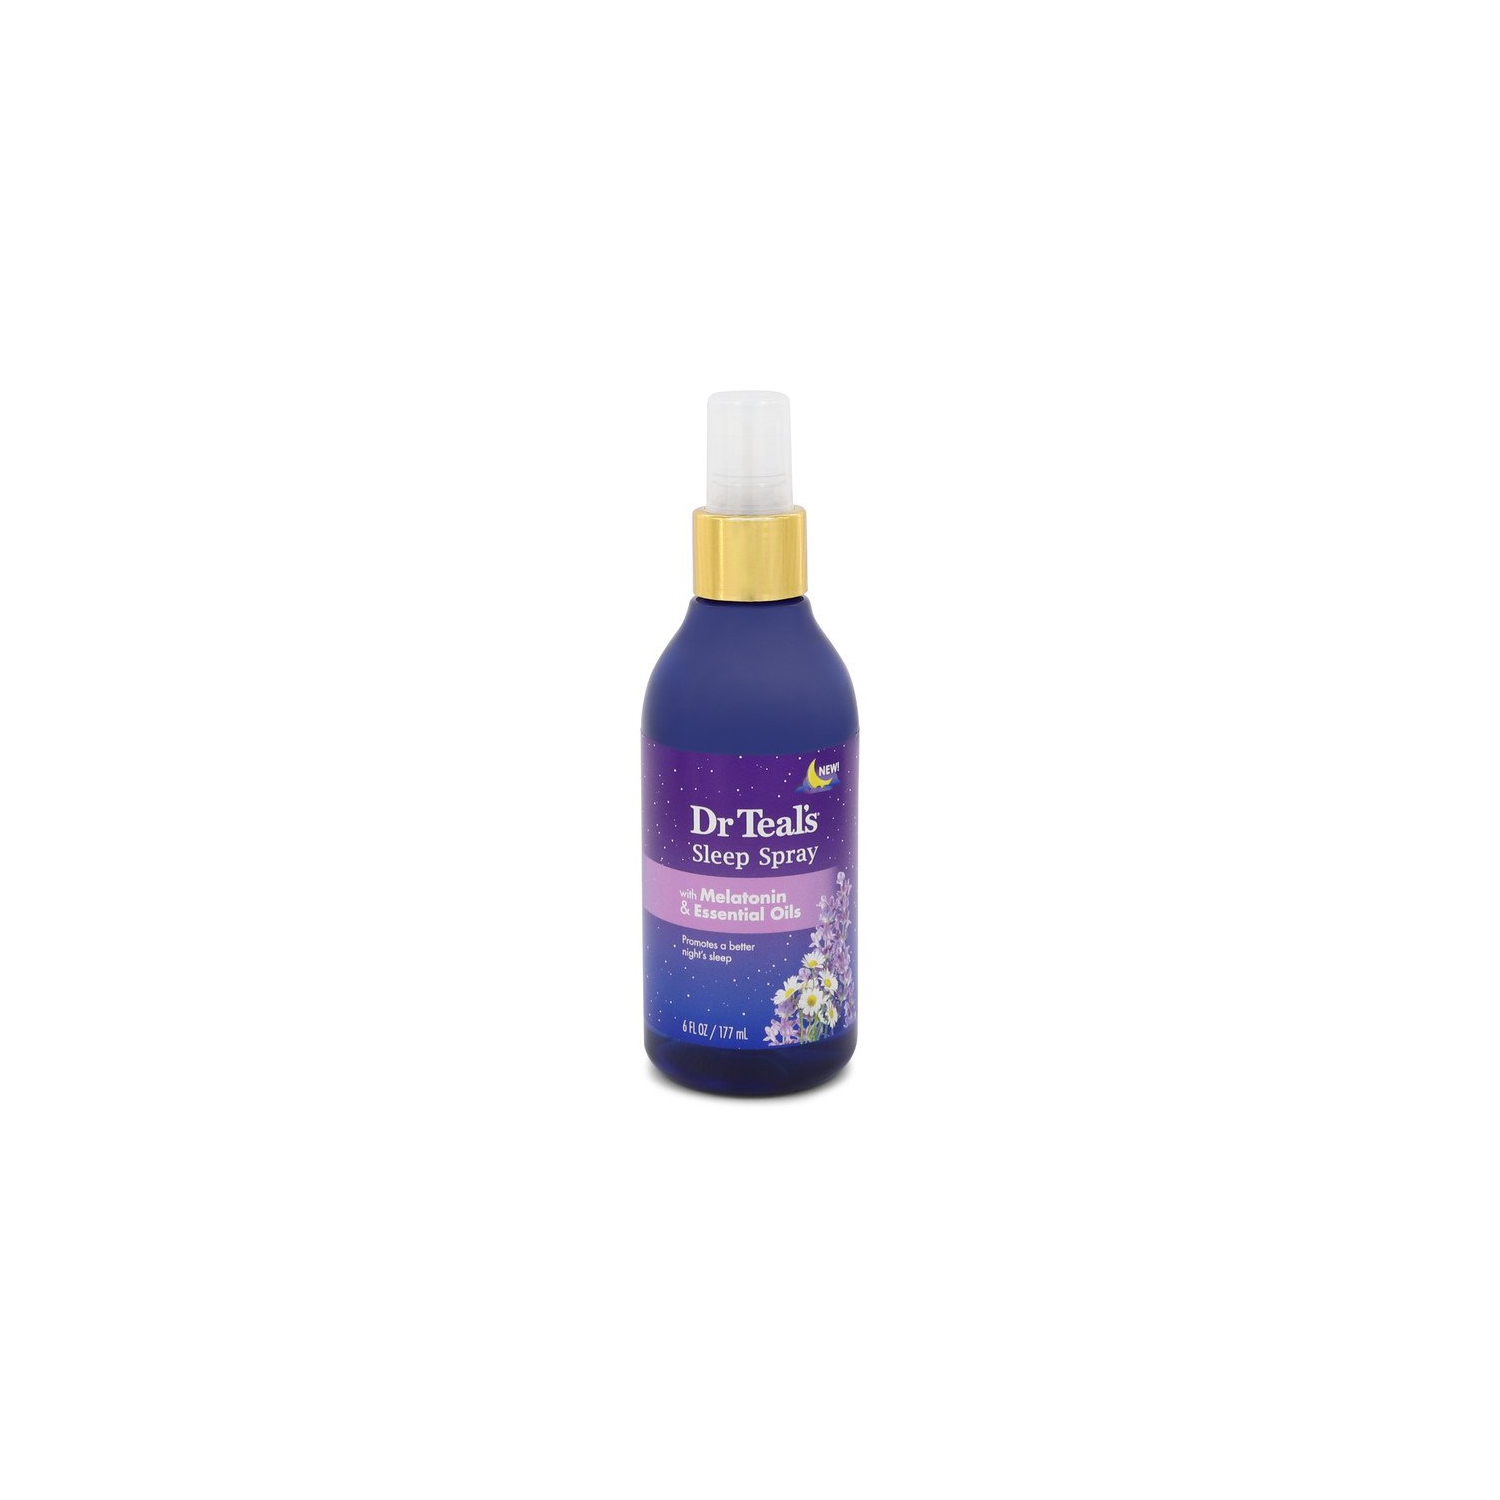 Dr Teal's Sleep Spray by Dr Teal's Sleep Spray with Melatonin & Essenstial Oils to promote a better night sleep 6 oz for Women